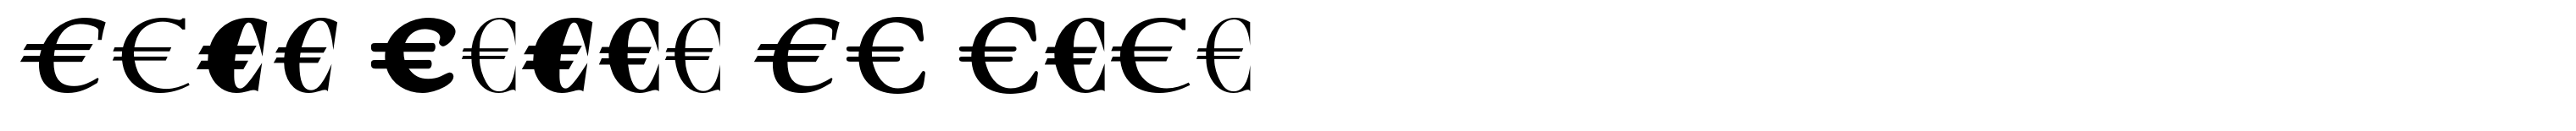 Euro Serif EF Five